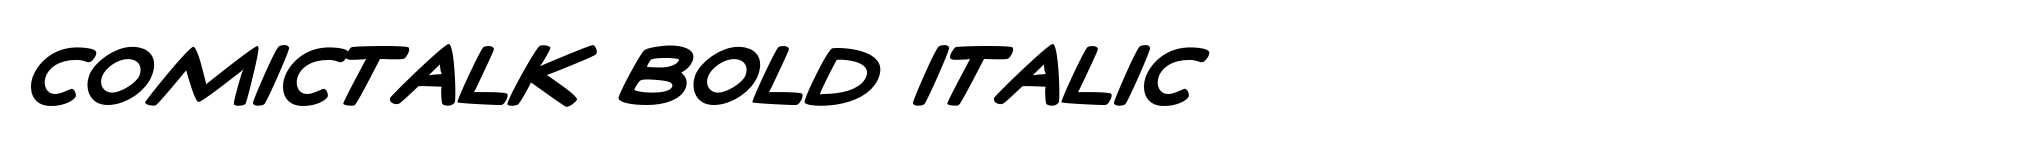 ComicTalk Bold Italic image